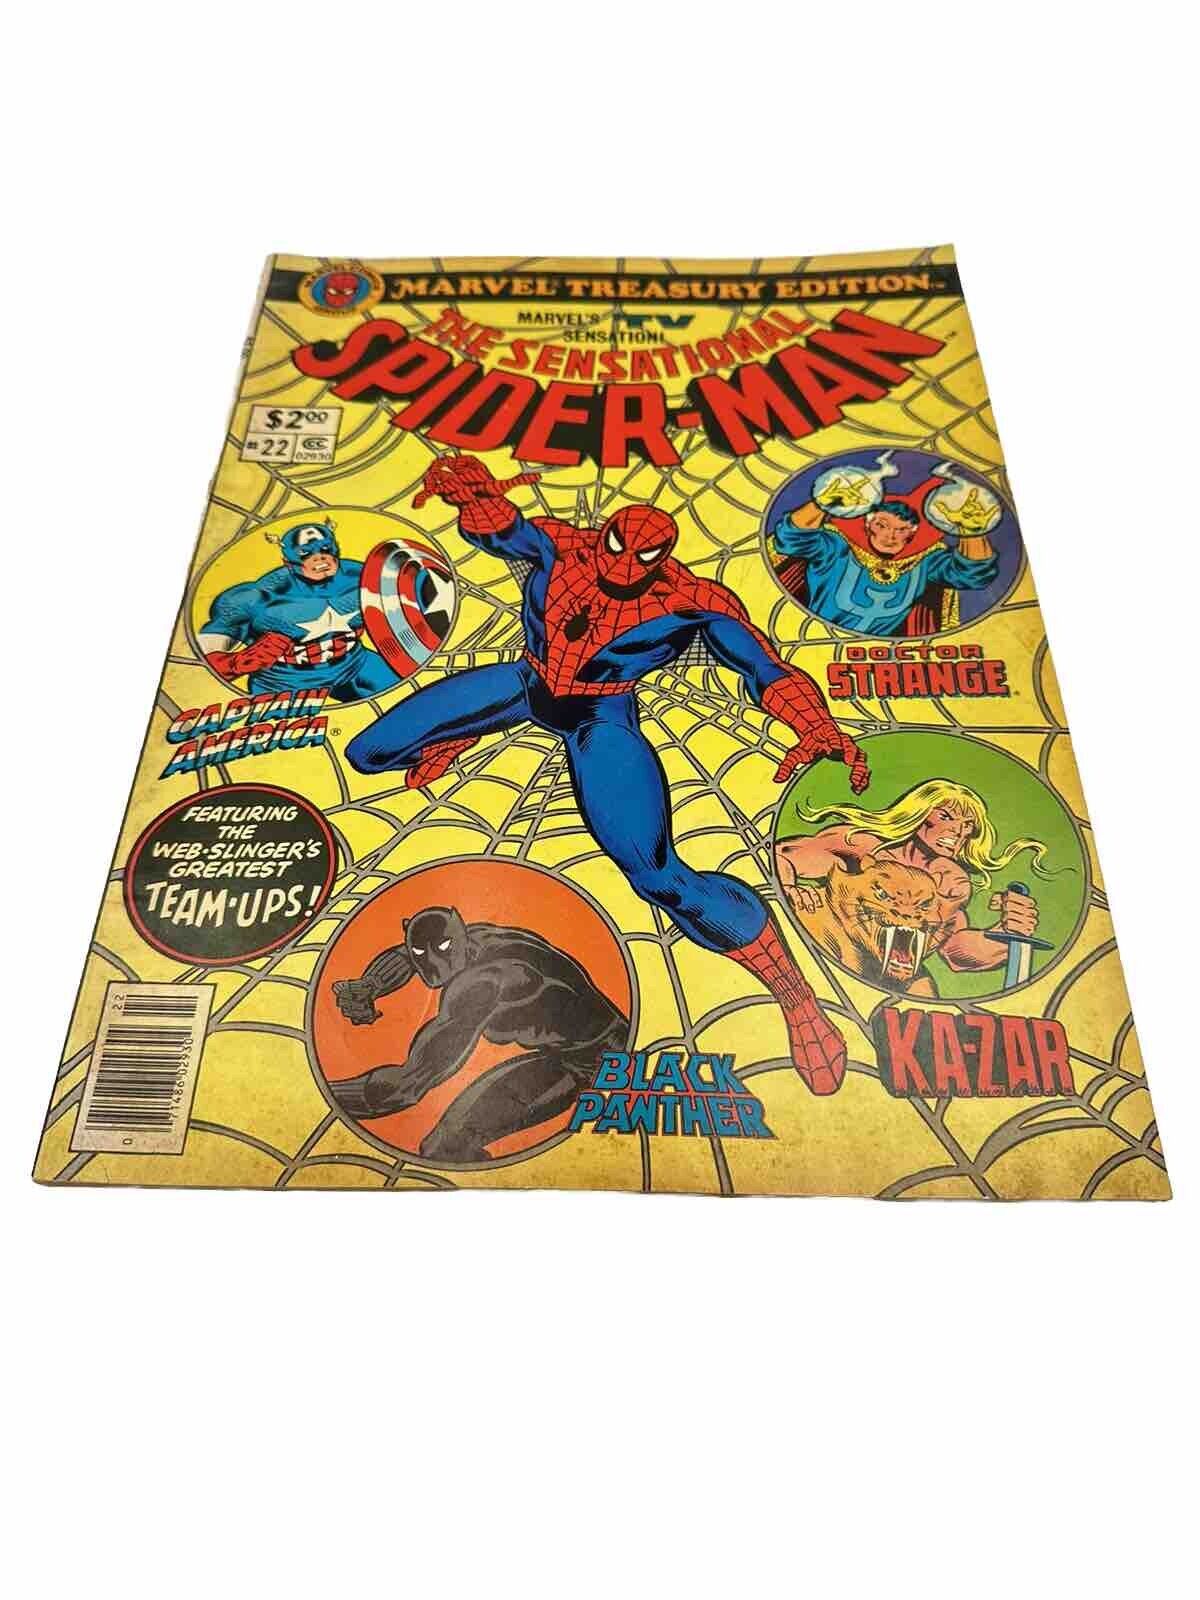 The Sensational Spiderman Comic 14 1977 Marvel Treasury Oversized Comic Book